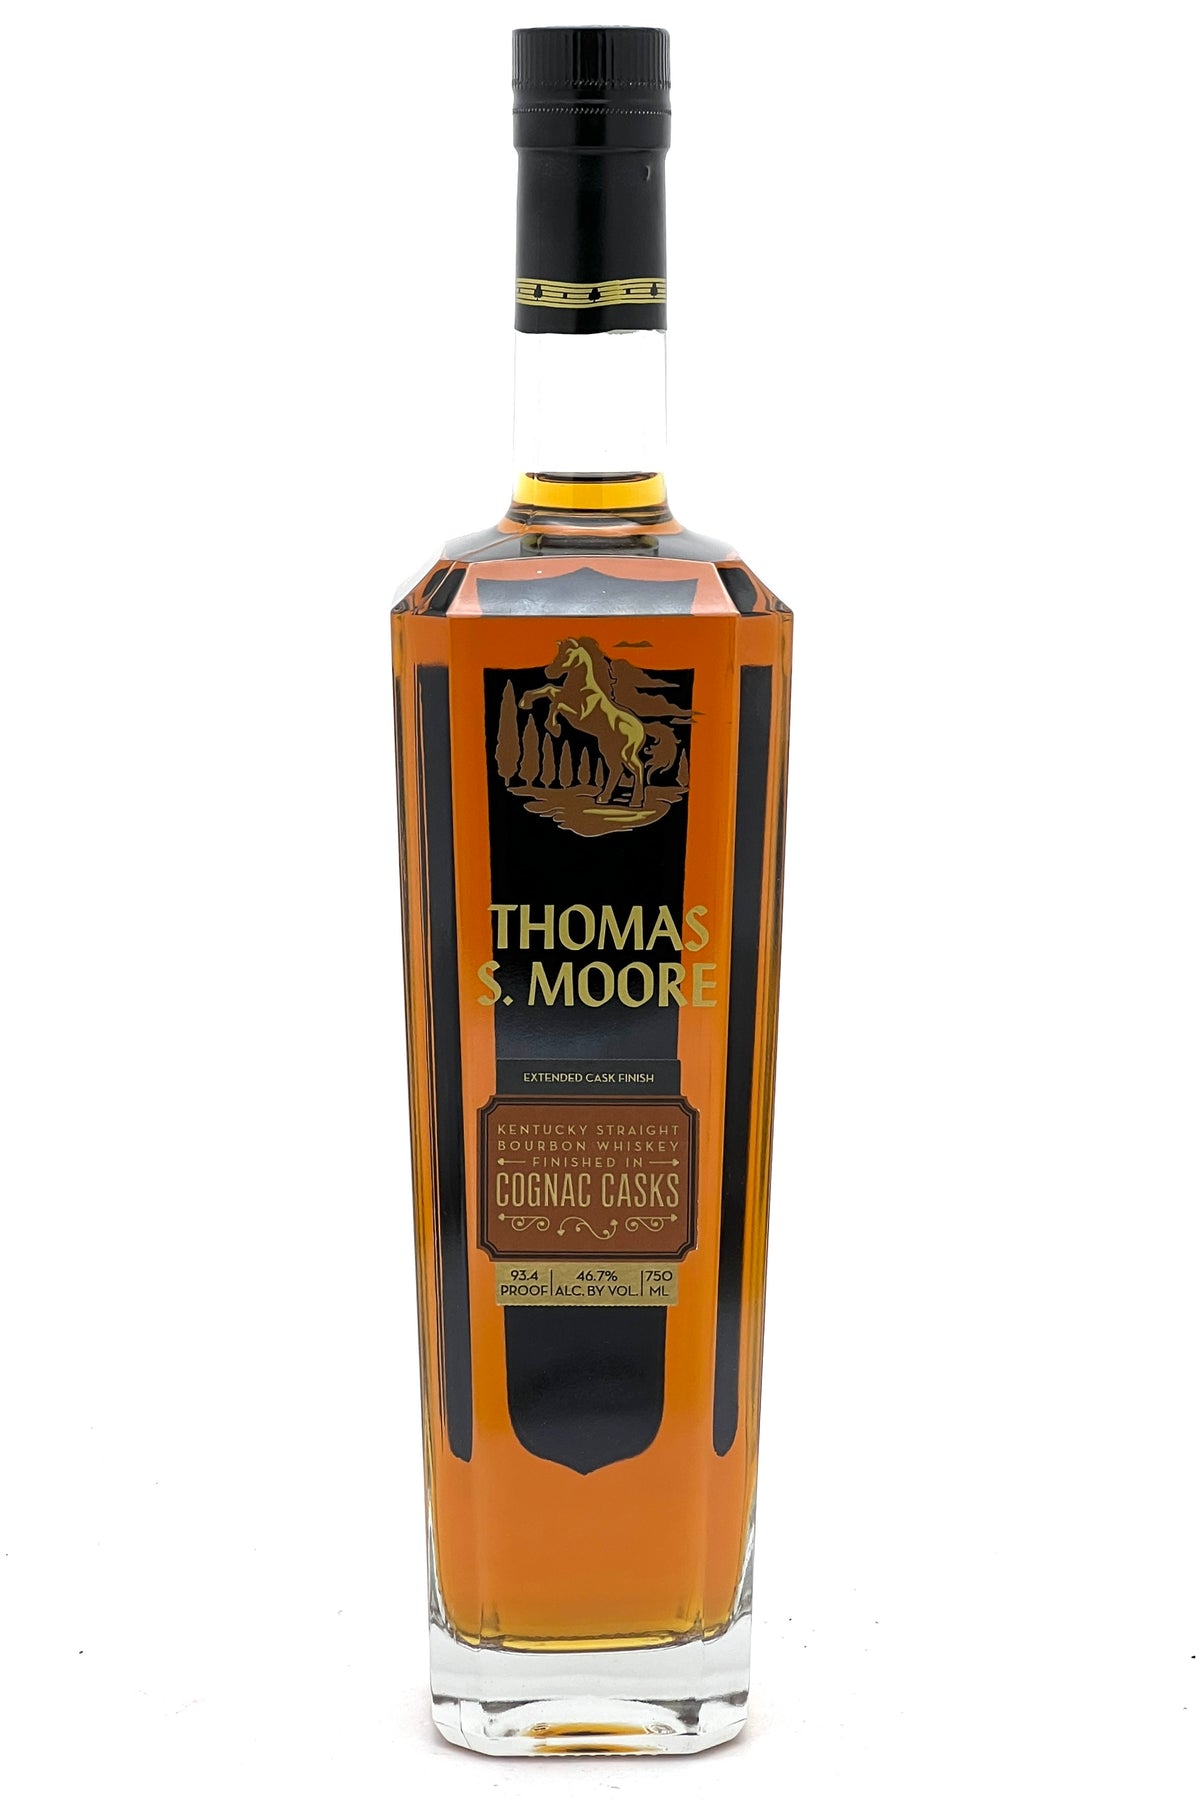 Thomas S. Moore Cognac Cask Finish Bourbon Whiskey